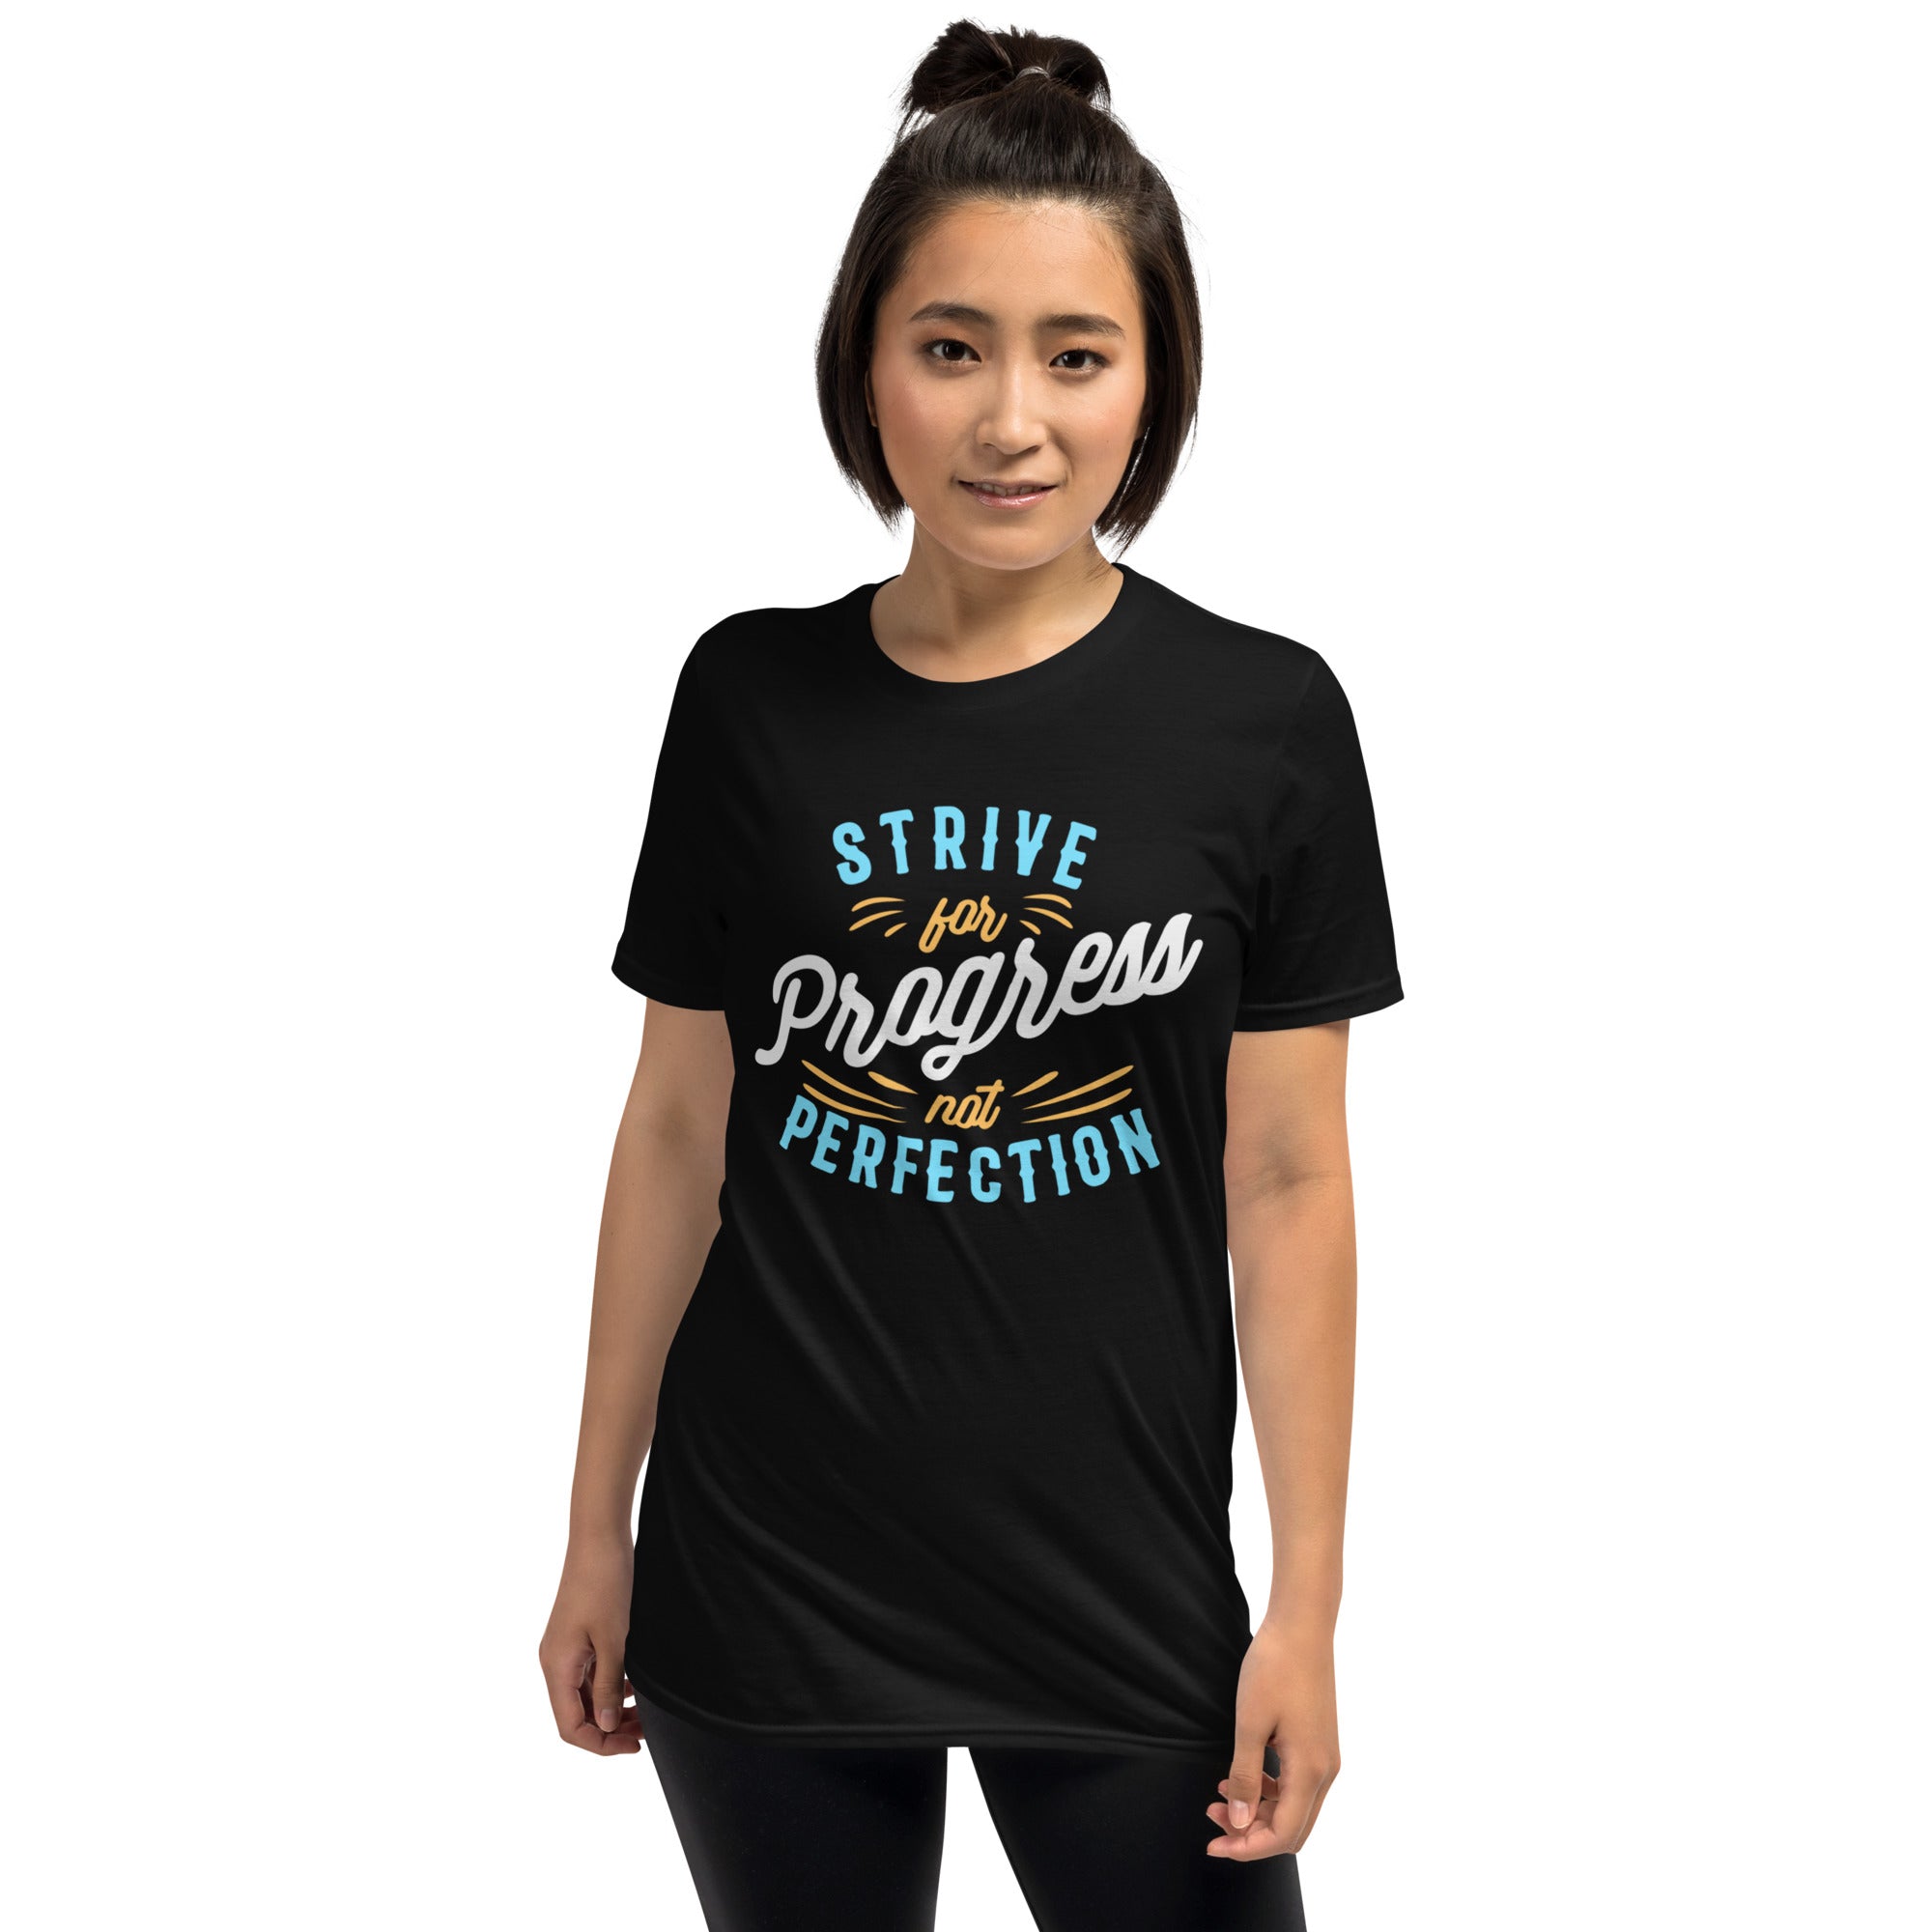 Strive For Progress, Not Perfection - Short-Sleeve Unisex T-Shirt